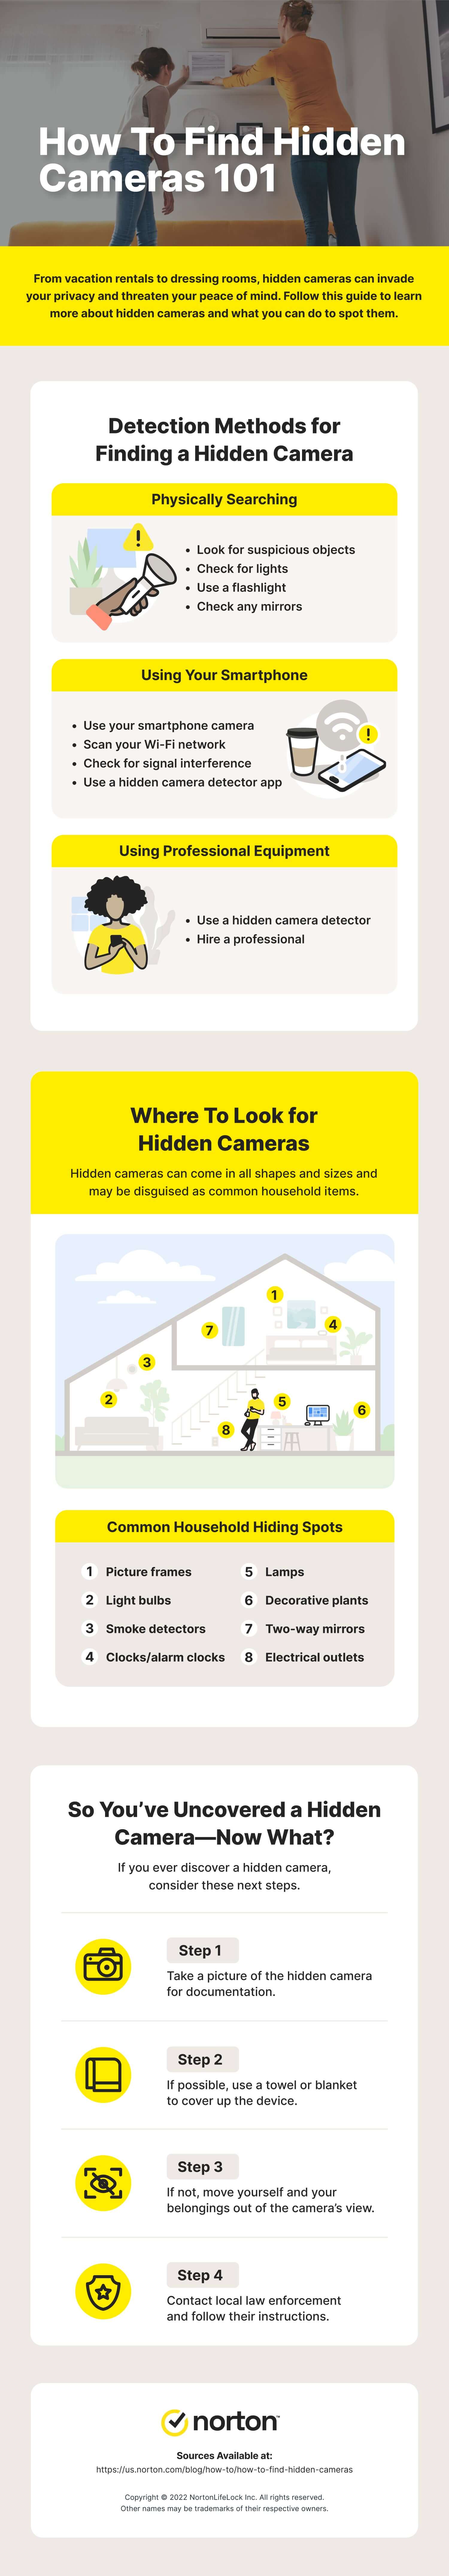 How to find hidden cameras